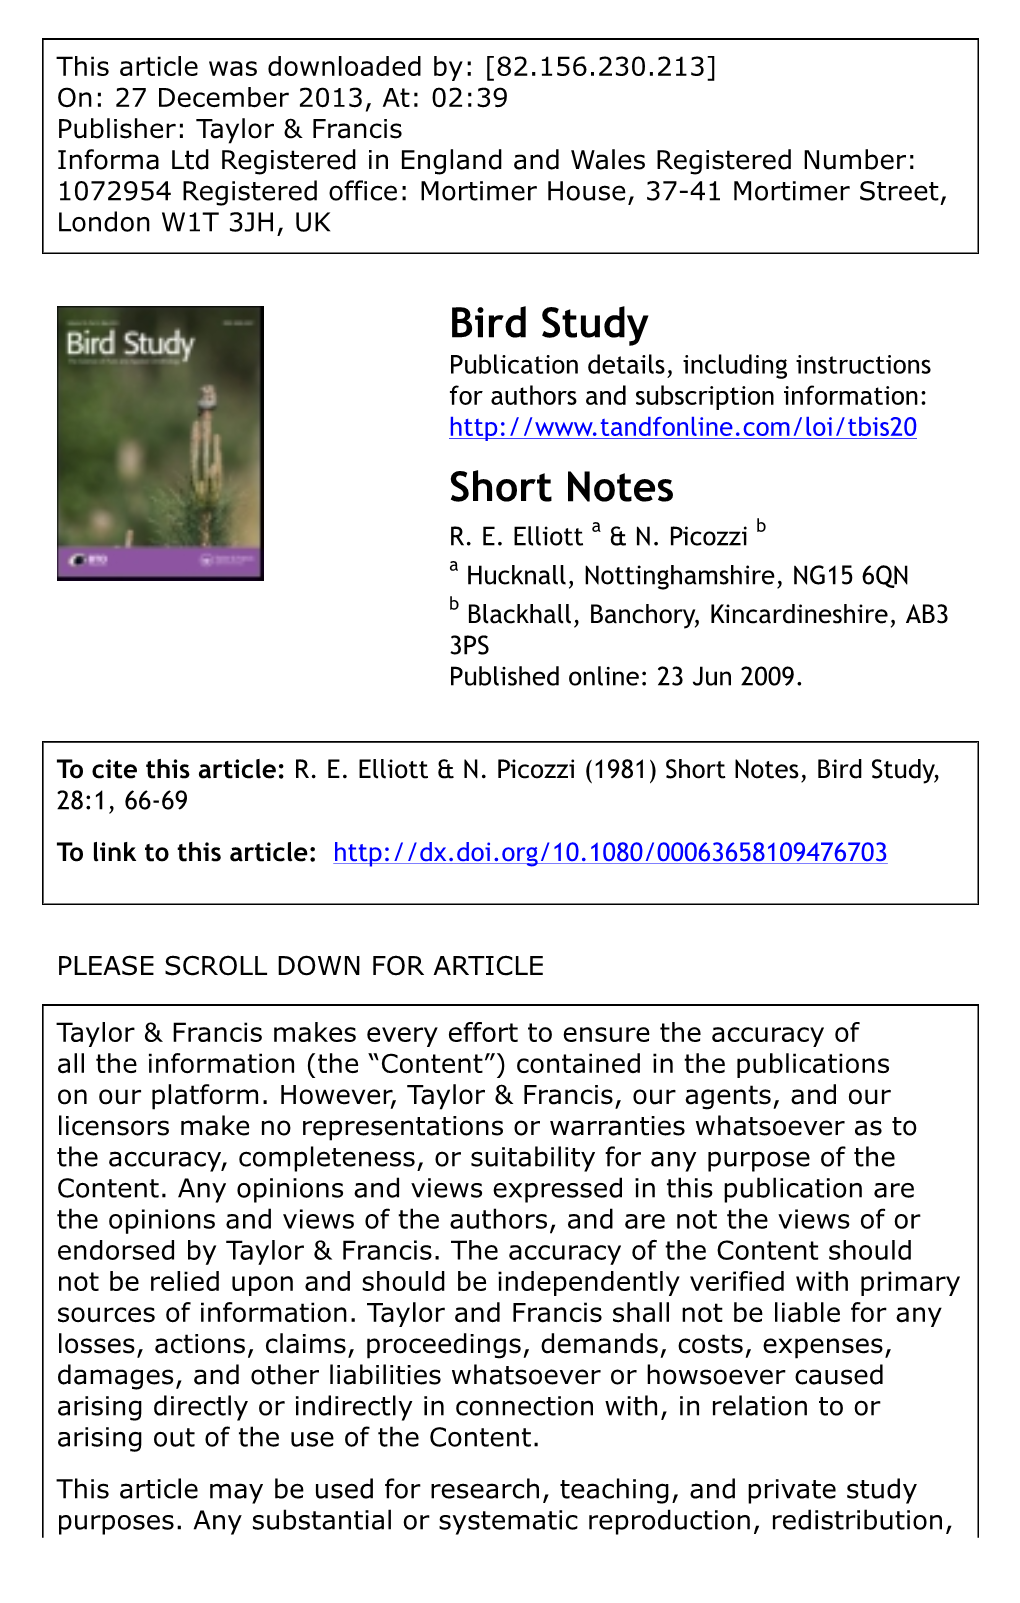 Bird Study Short Notes